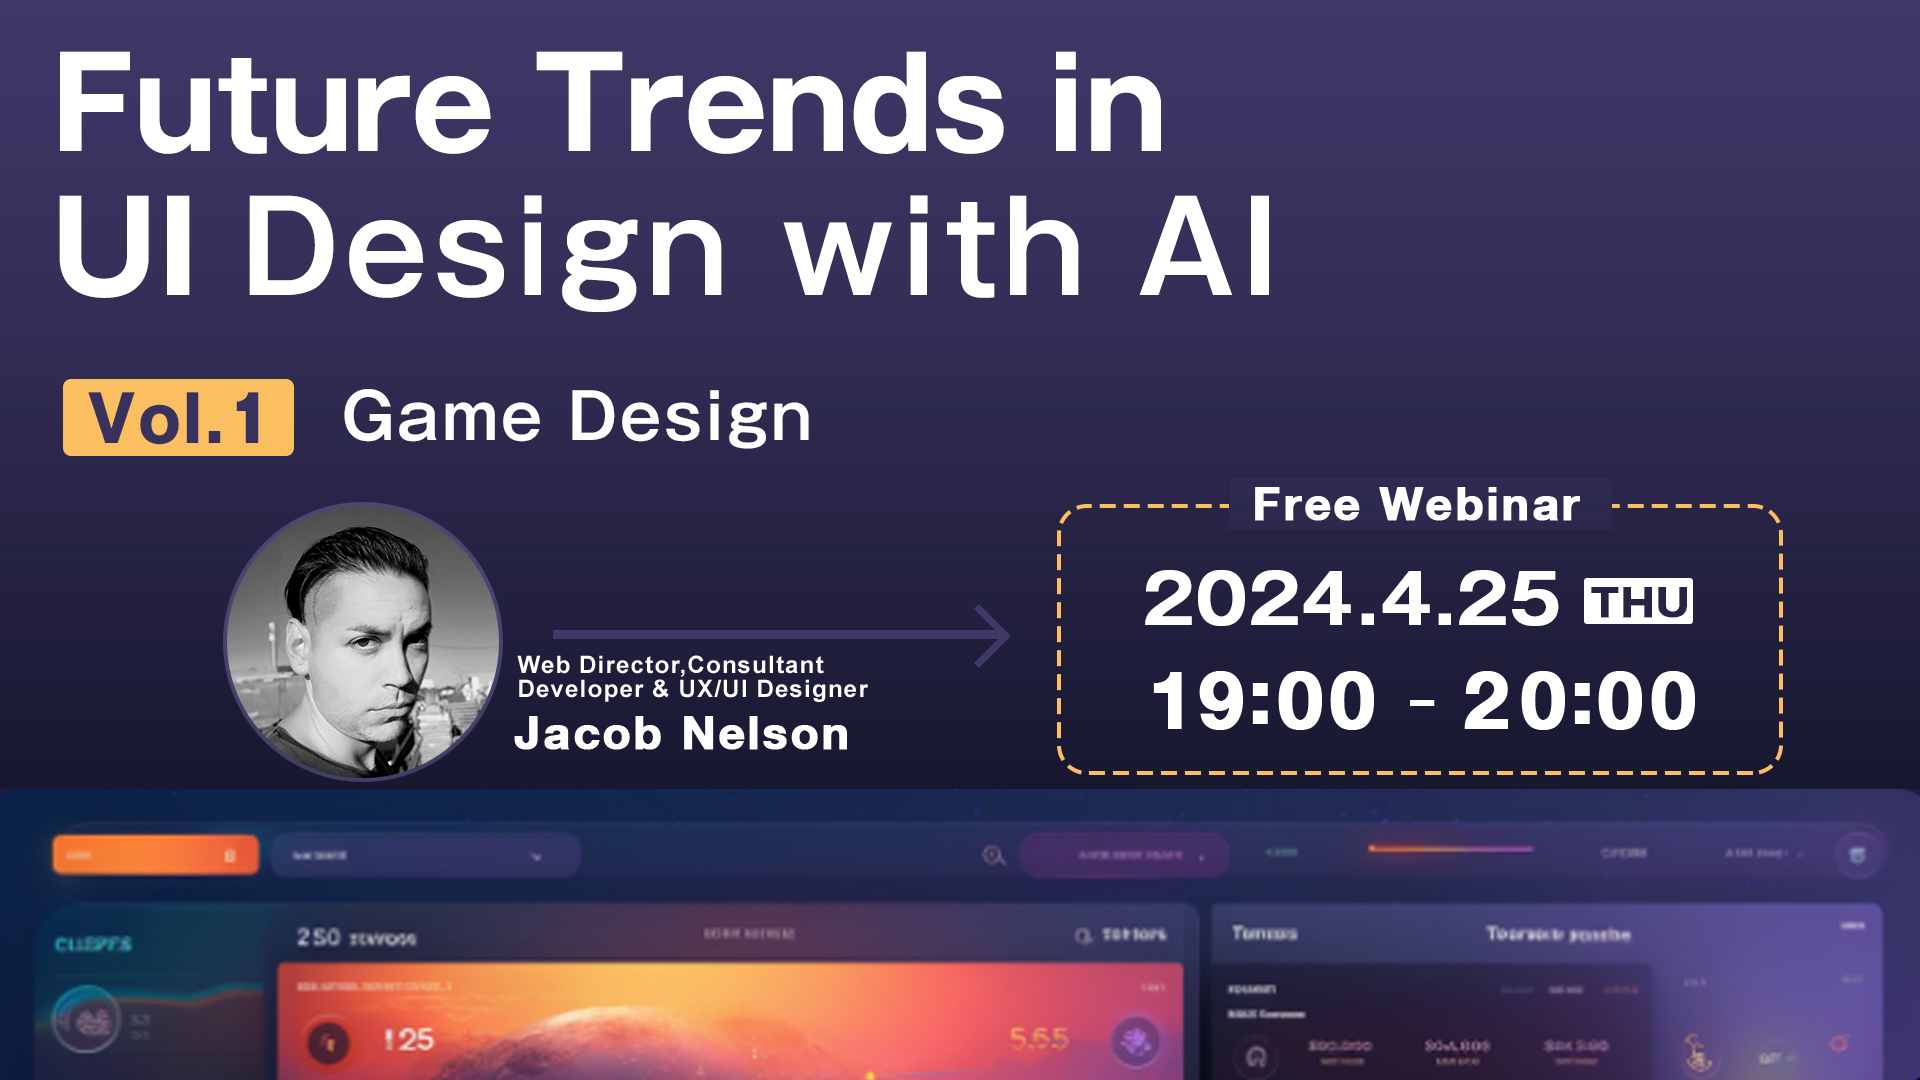 Future Trends in UI Design with AI: Vol 1 Game Design